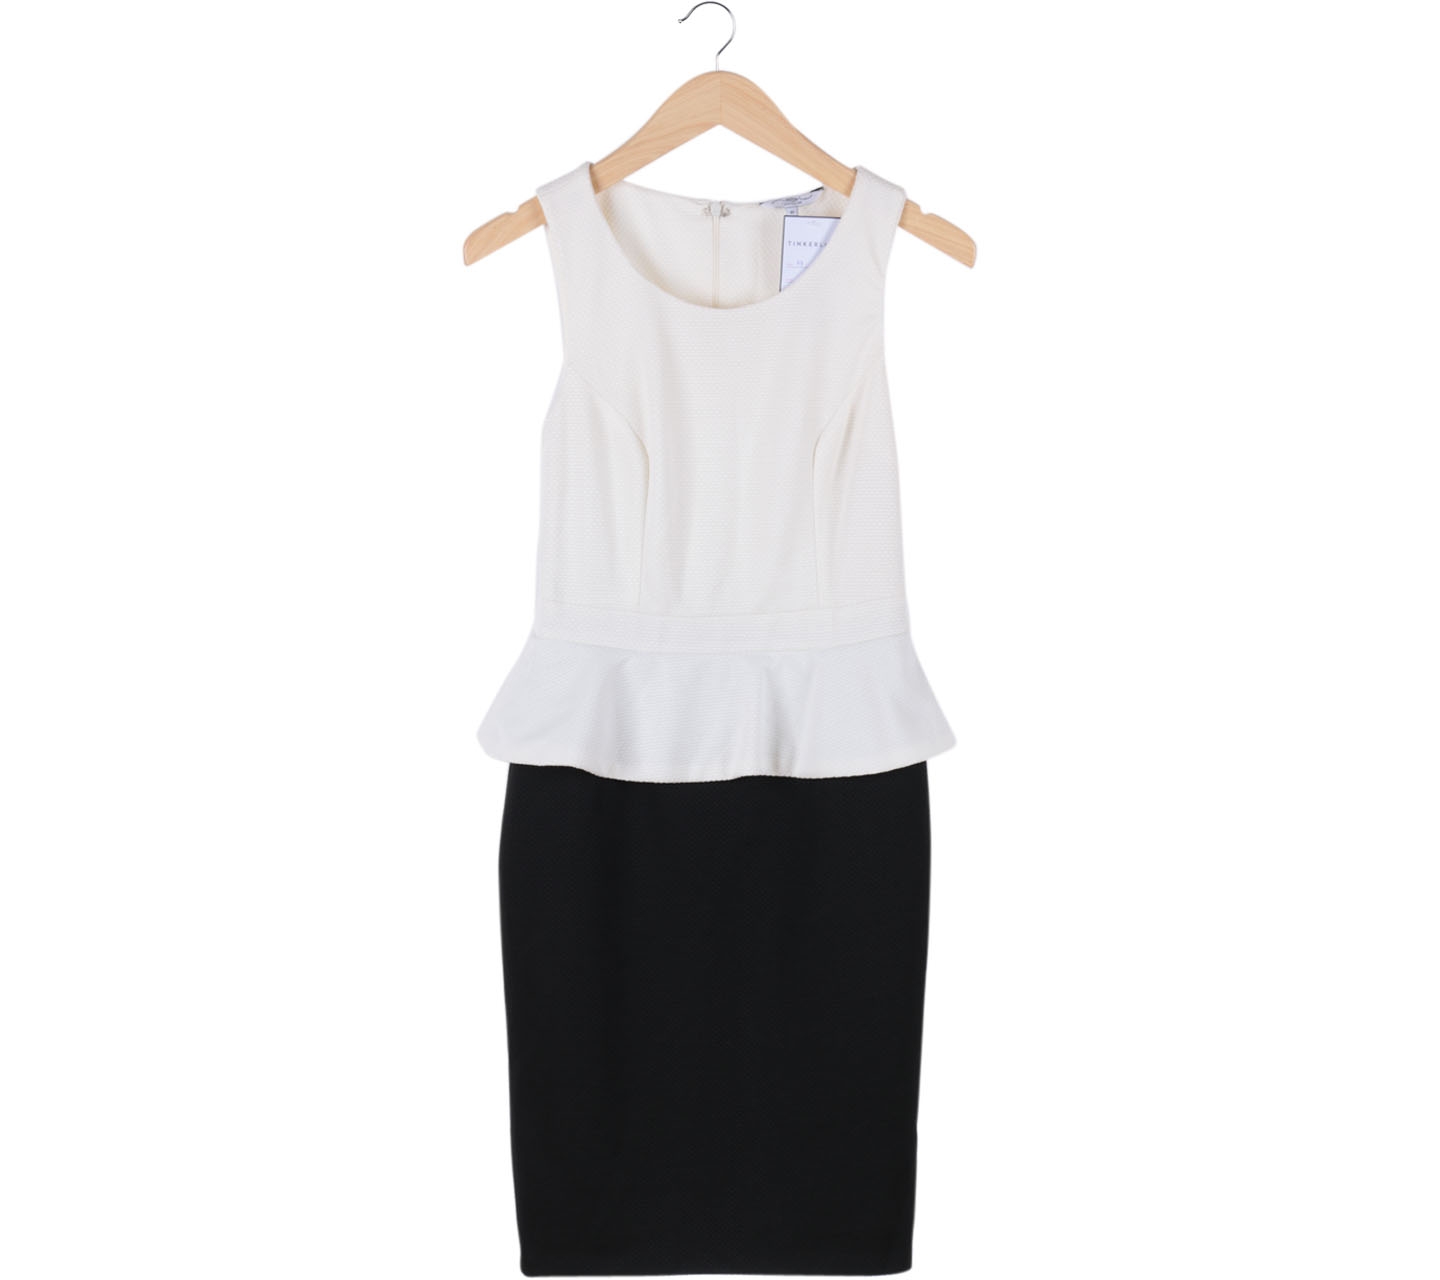 New Look Black And White Peplum Textured Mini Dress